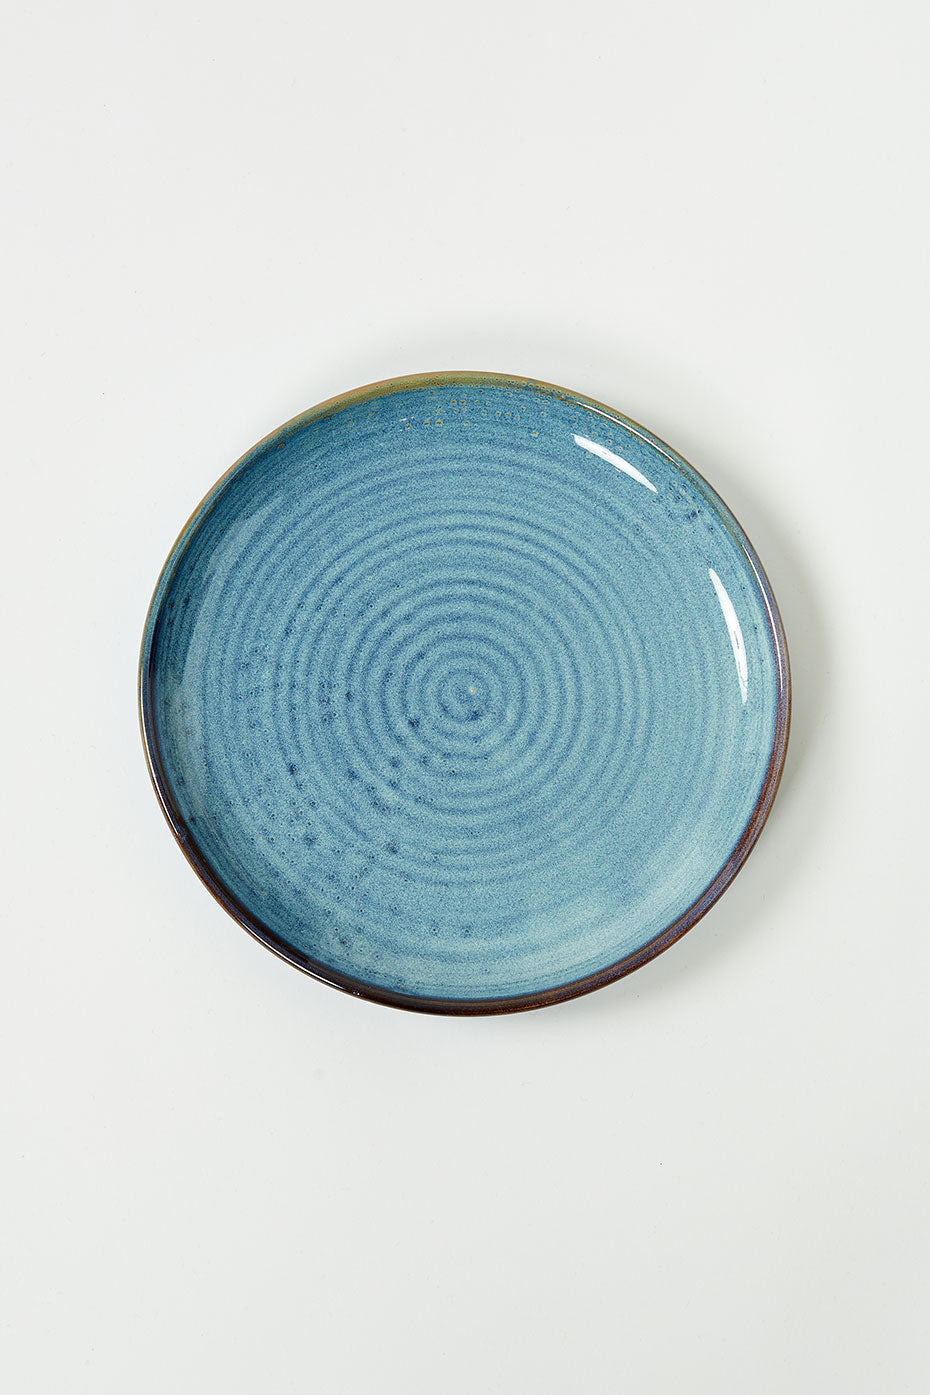 HK Living Rustic Blue Chef Ceramics Side Plate